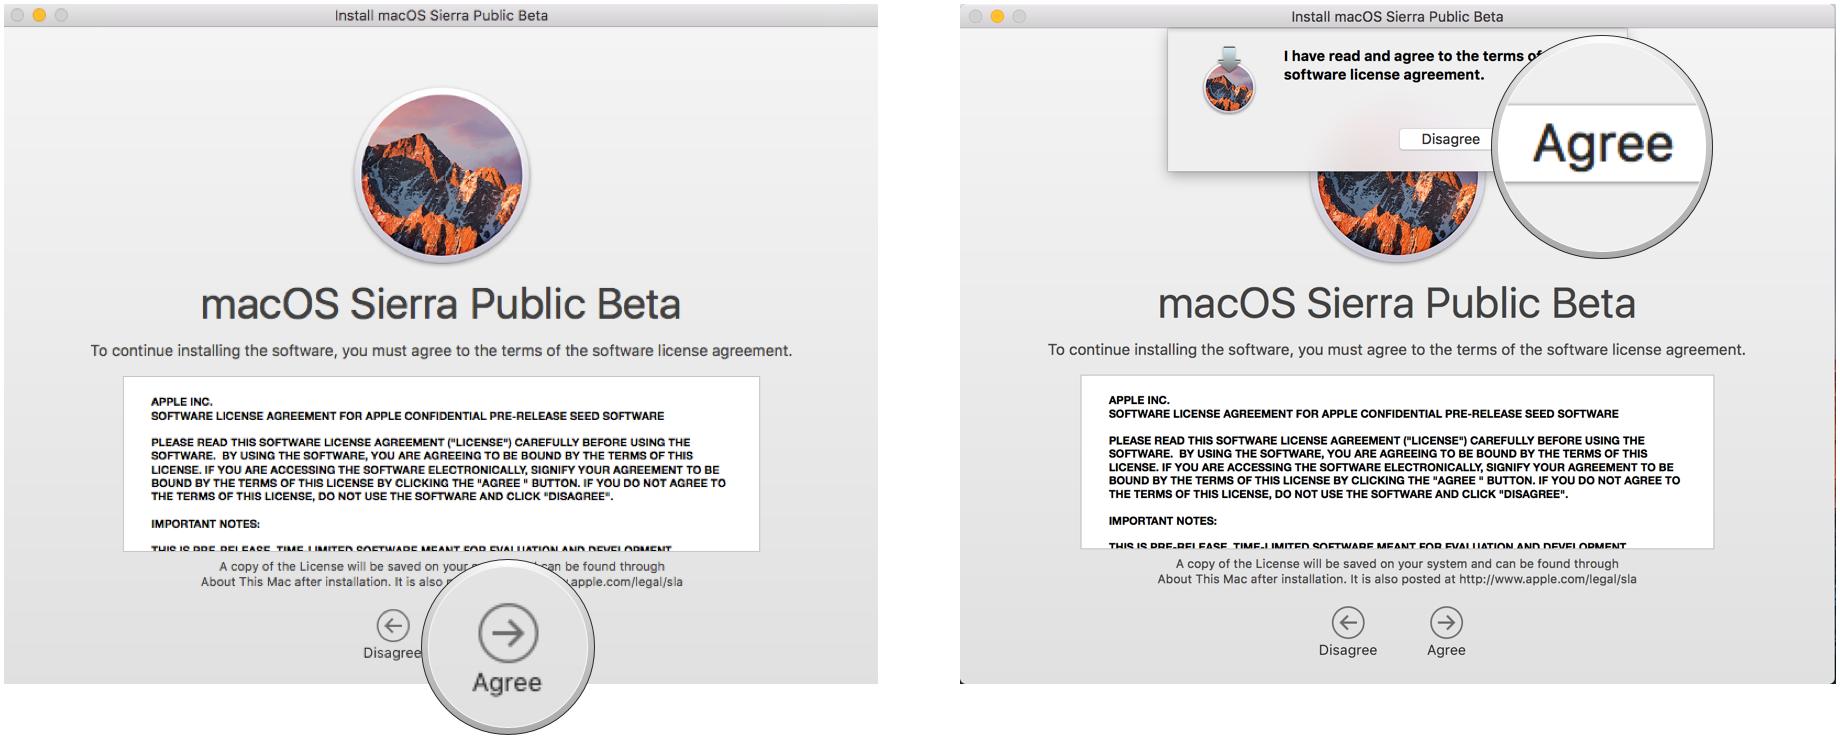 How to install macOS Sierra public beta